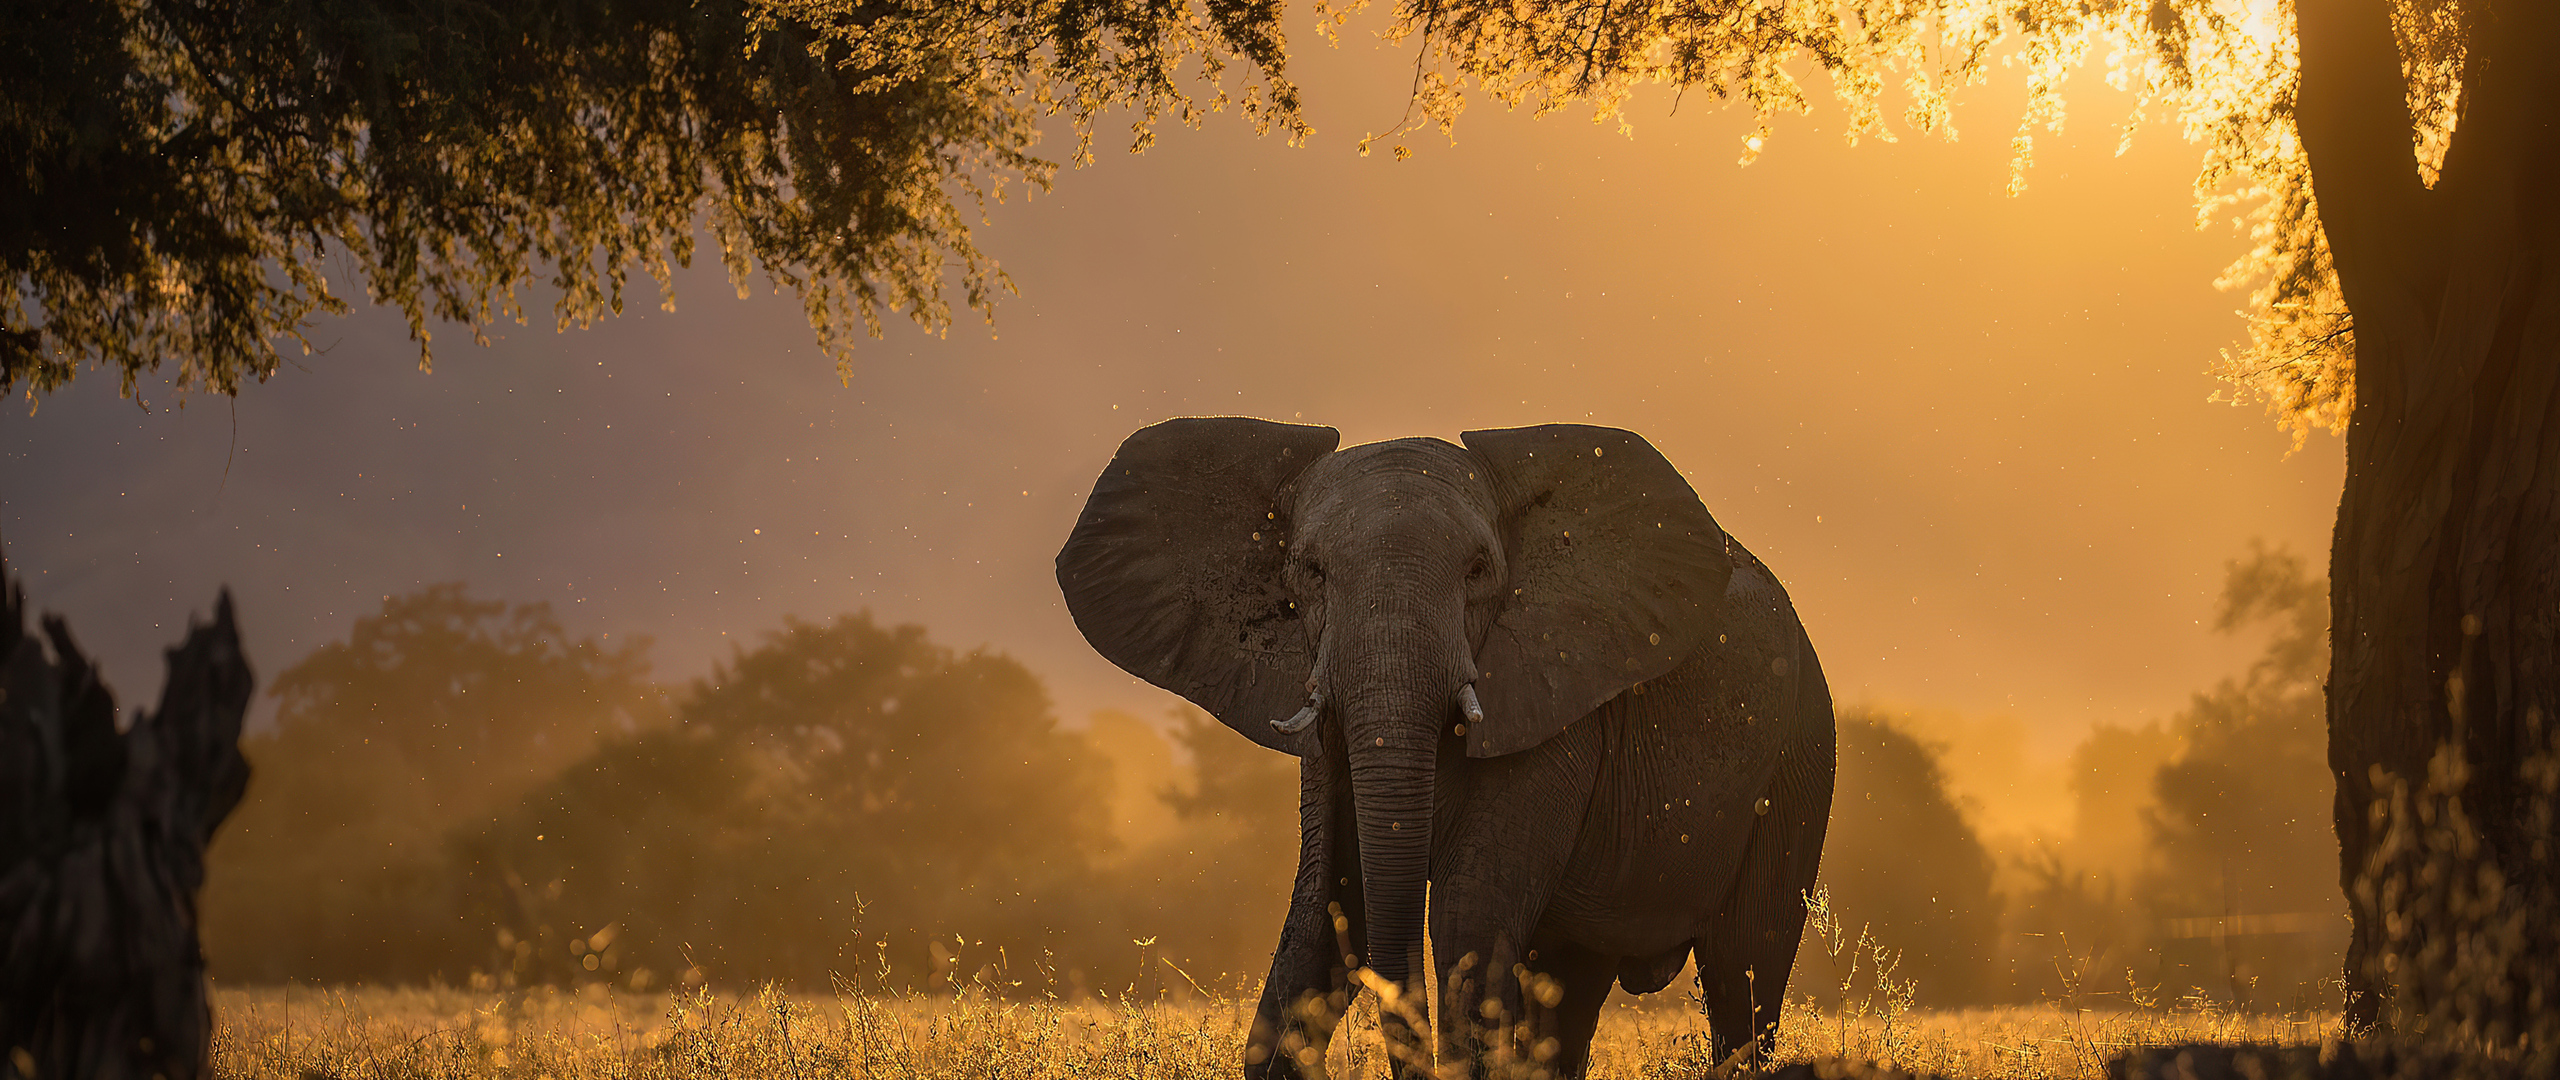 elephant-forest-sunbeams-morning-4k-5j-2560x1080.jpg